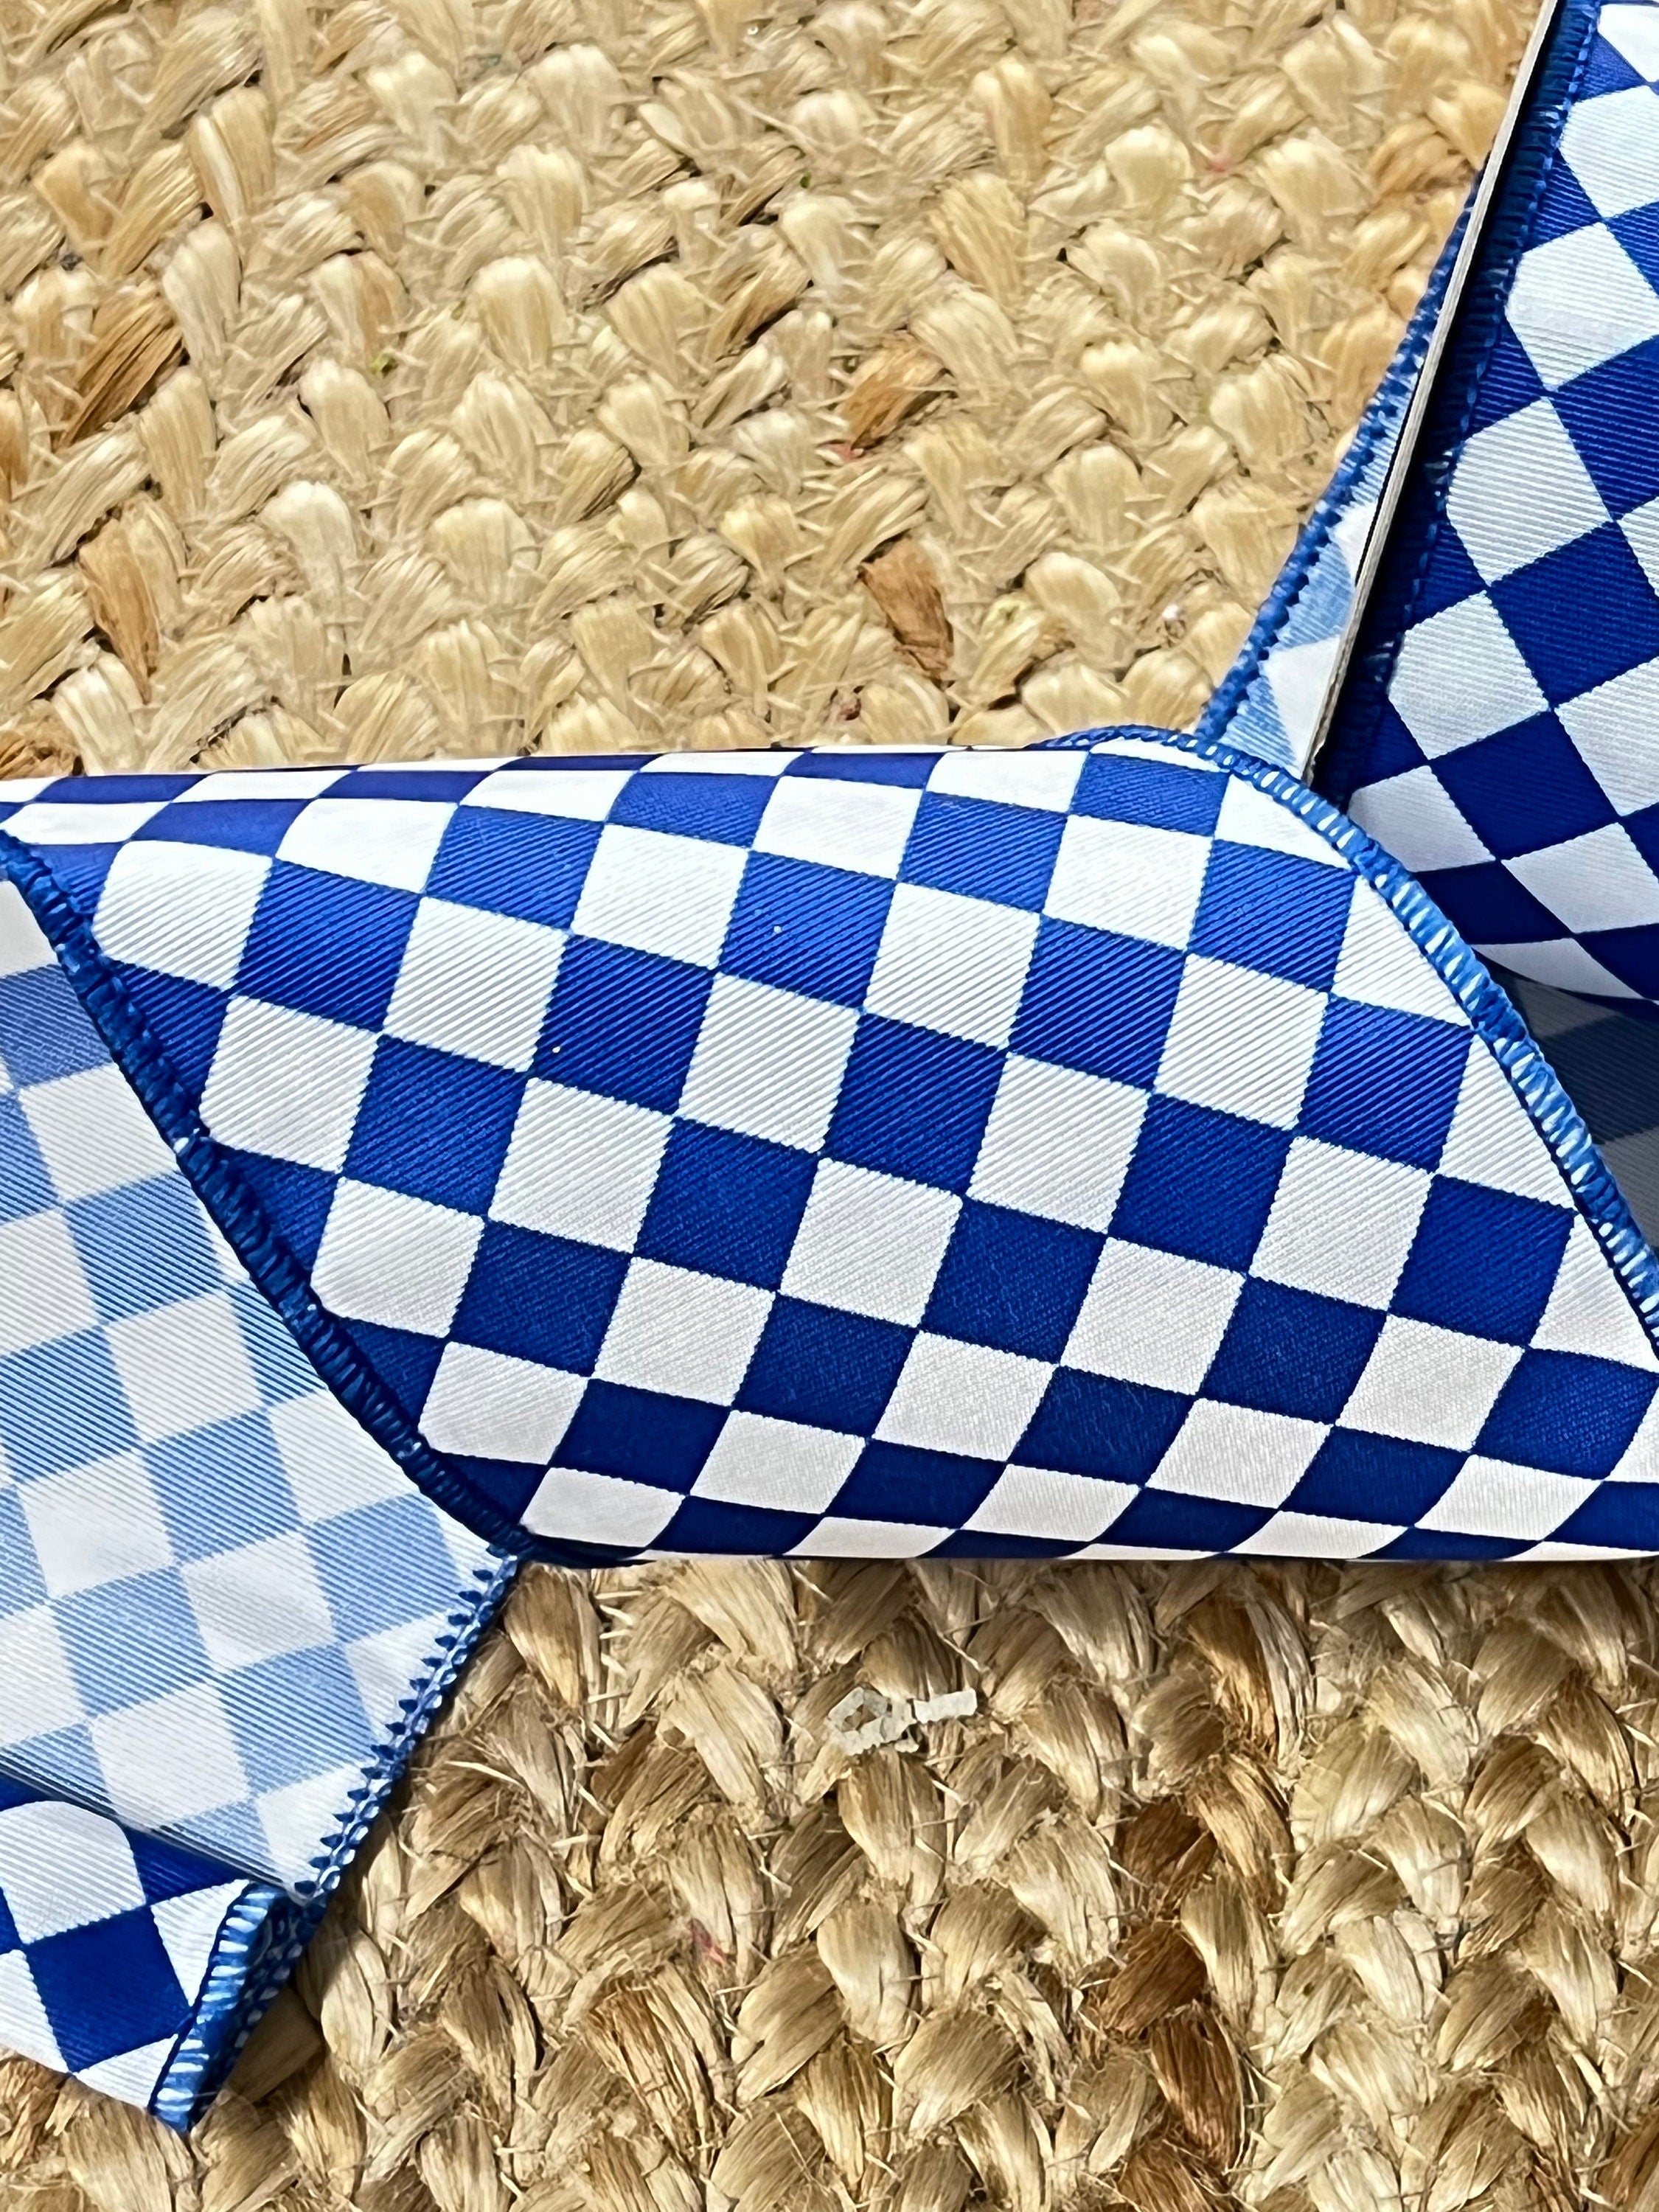 4 inch D Stevens Blue & White Grossgrain Checkerboard ~ 10 yards ~ Wired